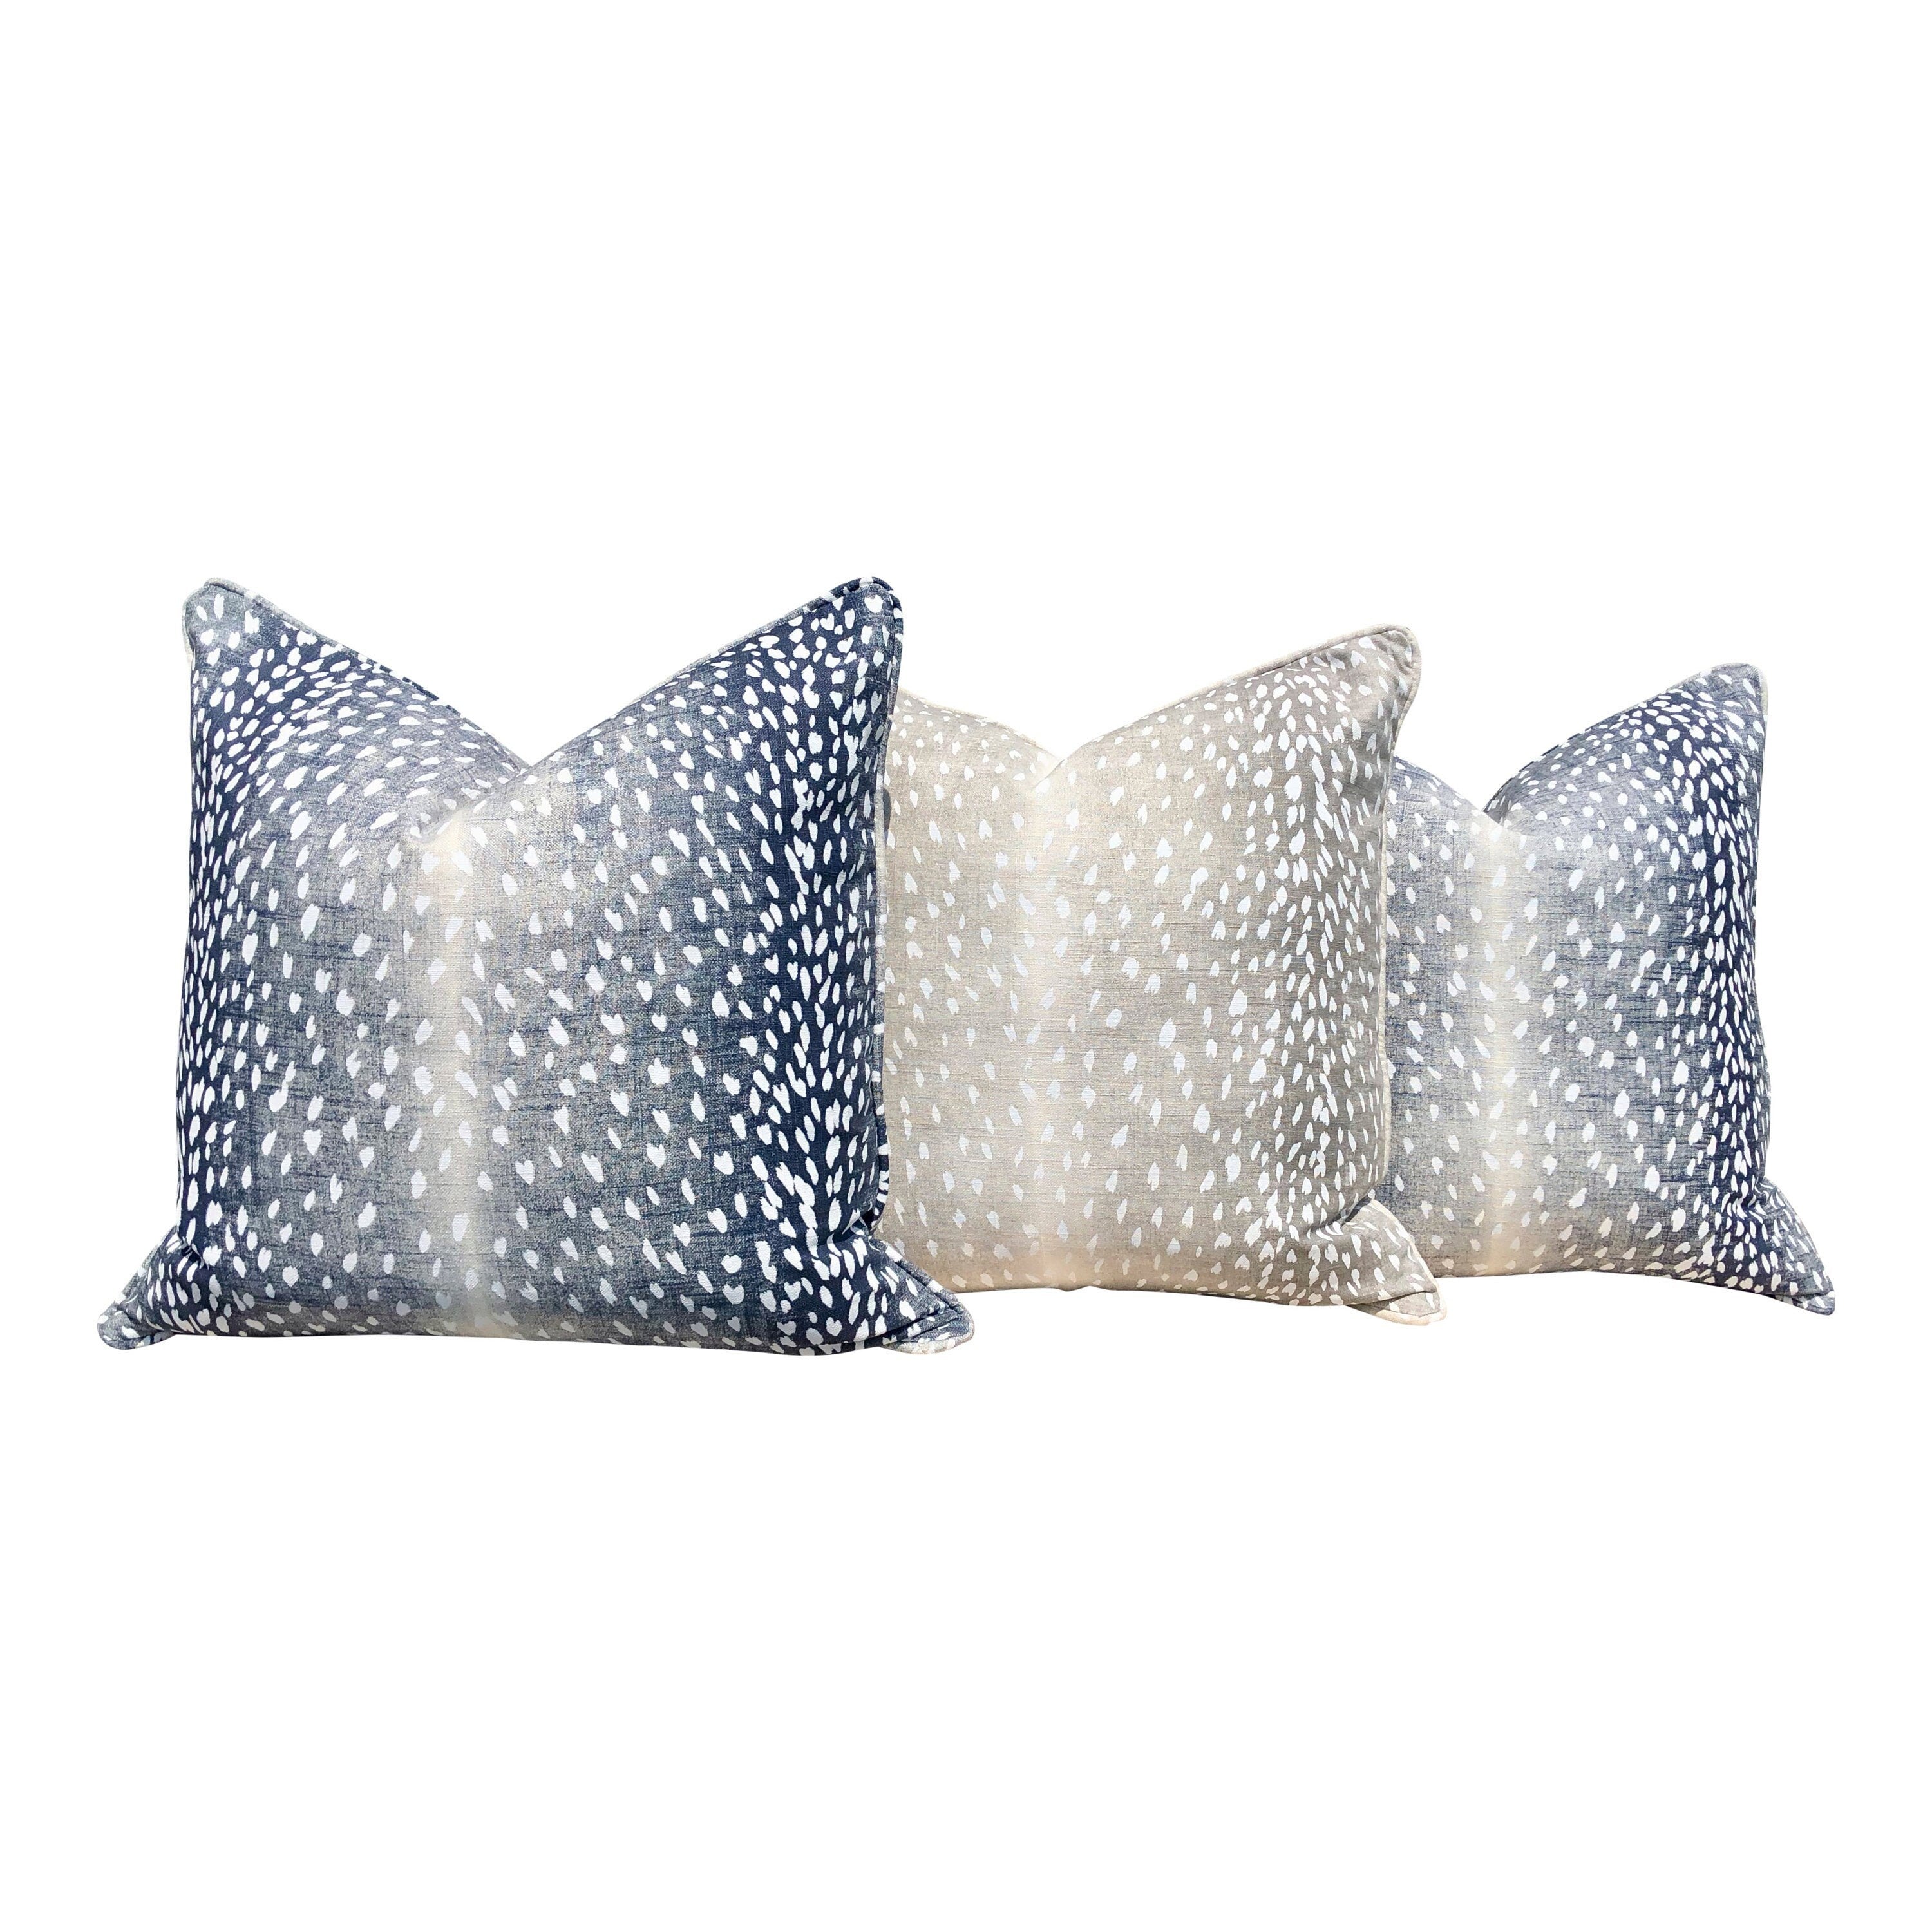 Antelope Pillow Navy Blue. Long Lumbar Pillow //  Accent pillow cover // Animal Print Navy Pillow // Blue Antelope Pillow // Euro Sham 26x26